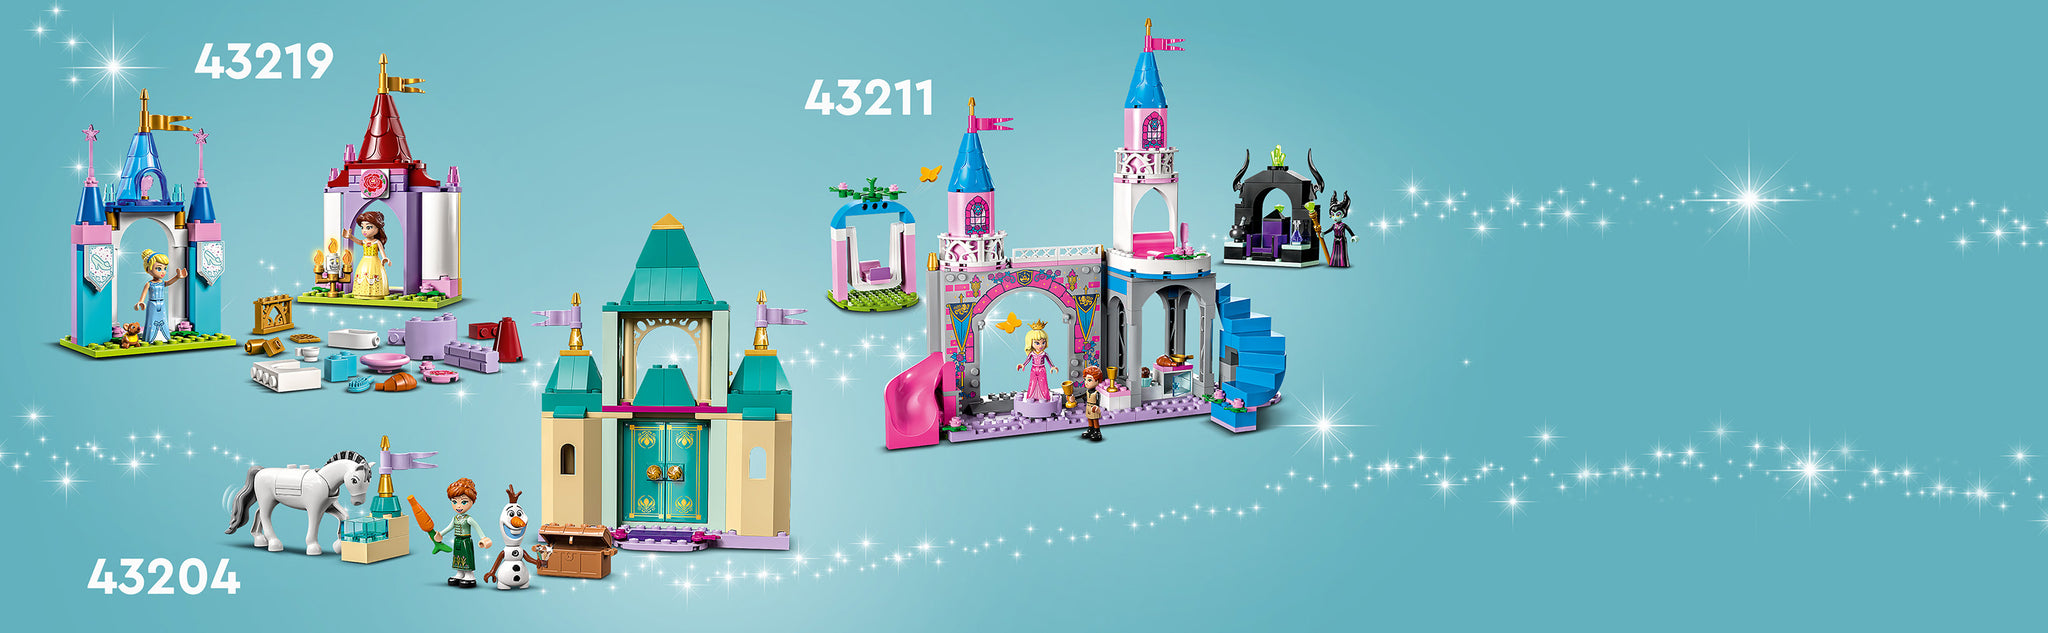 LEGO 43219 Disney Princess Kreative Schlösser